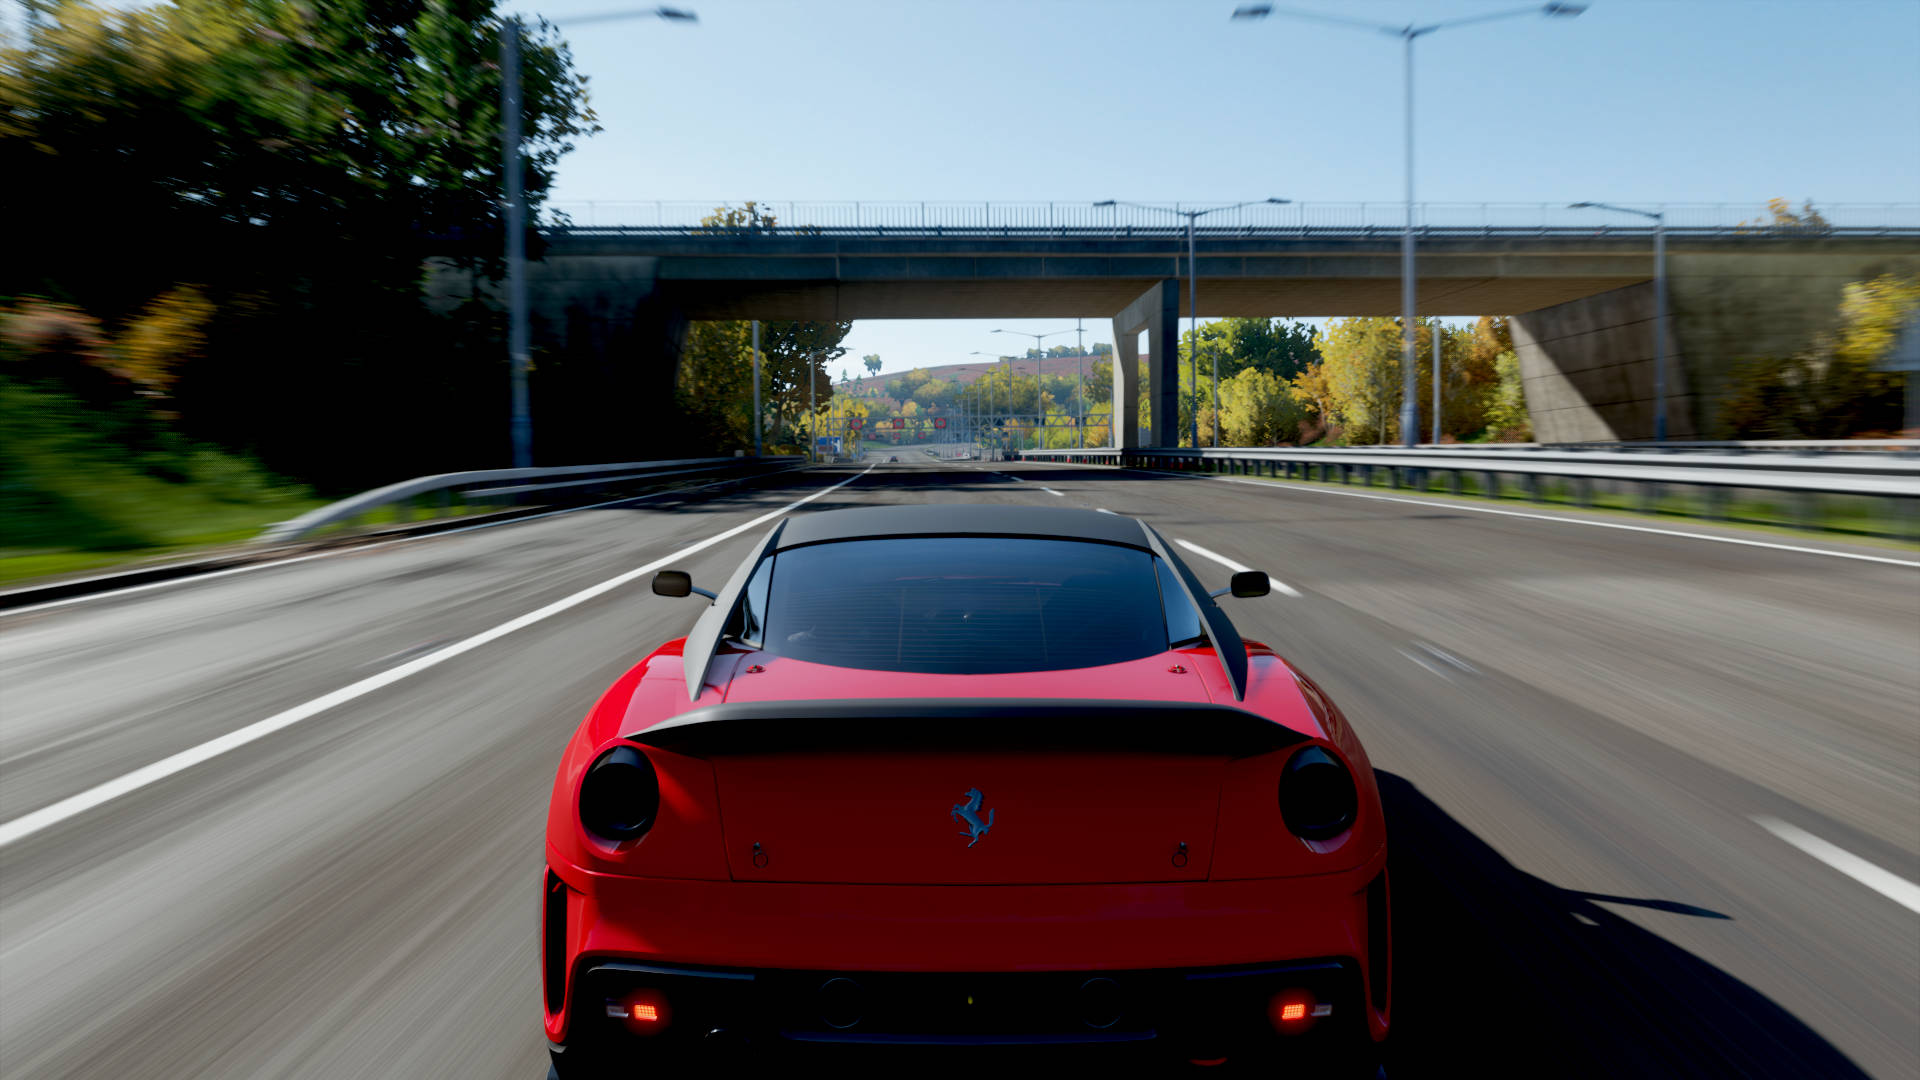 Forza Horizon 4 Red Ferrari Background